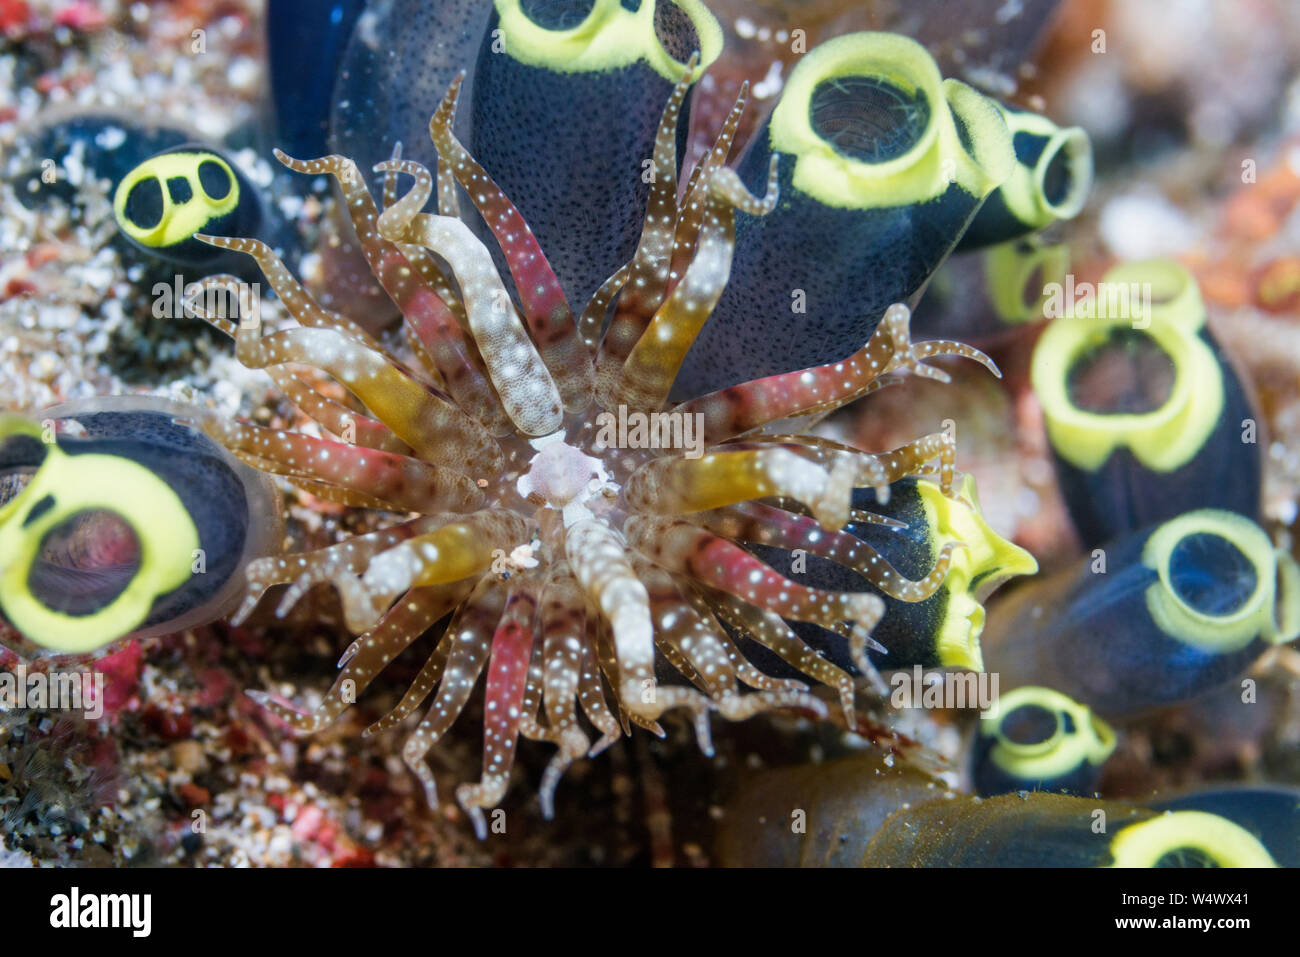 Swimming Anemone [Boloceroides mcmurrichi] and Stalked Ascidian [Clavelina robusta].  Lembeh Strait, North Sulawesi, Indonesia. Stock Photo